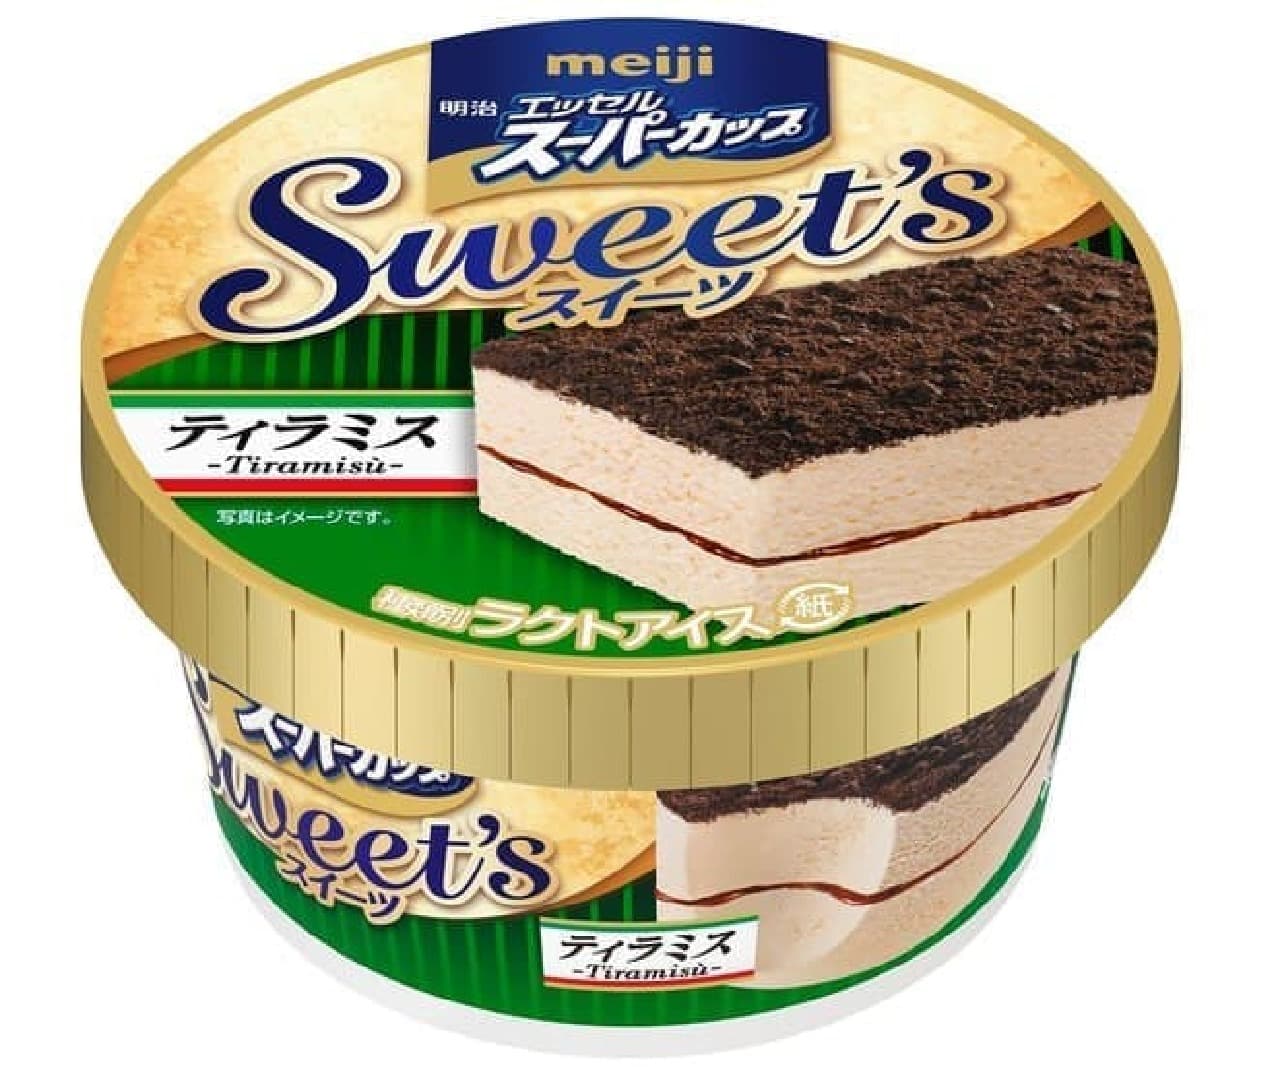 New ice cream product "Meiji Essel Super Cup Sweet's Tiramisu"